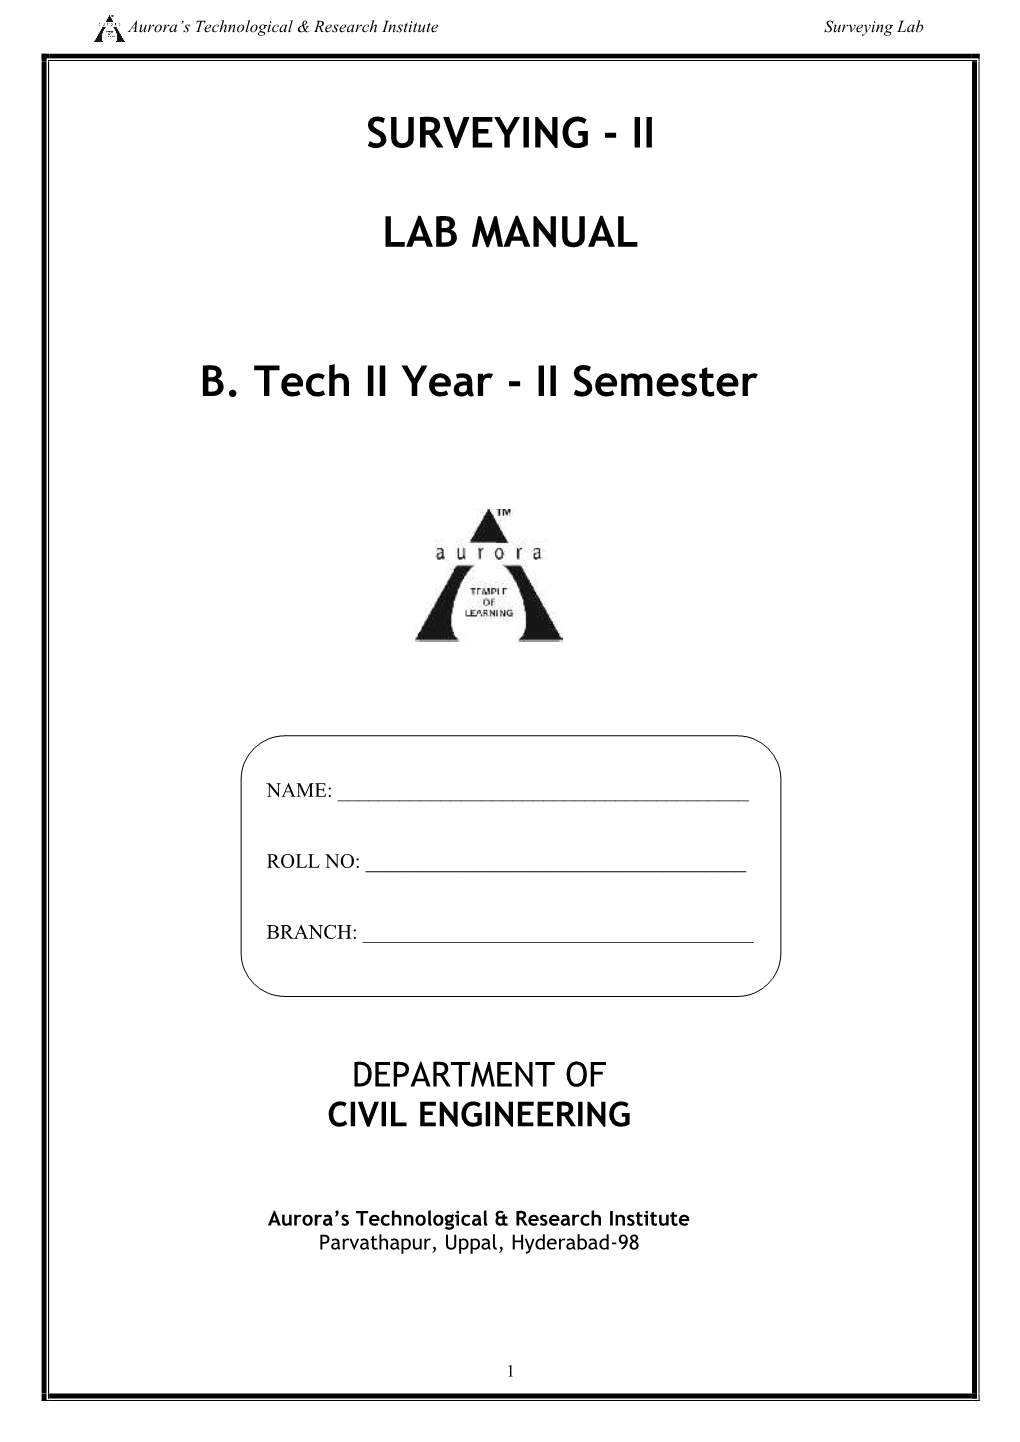 Surveying Lab Manual